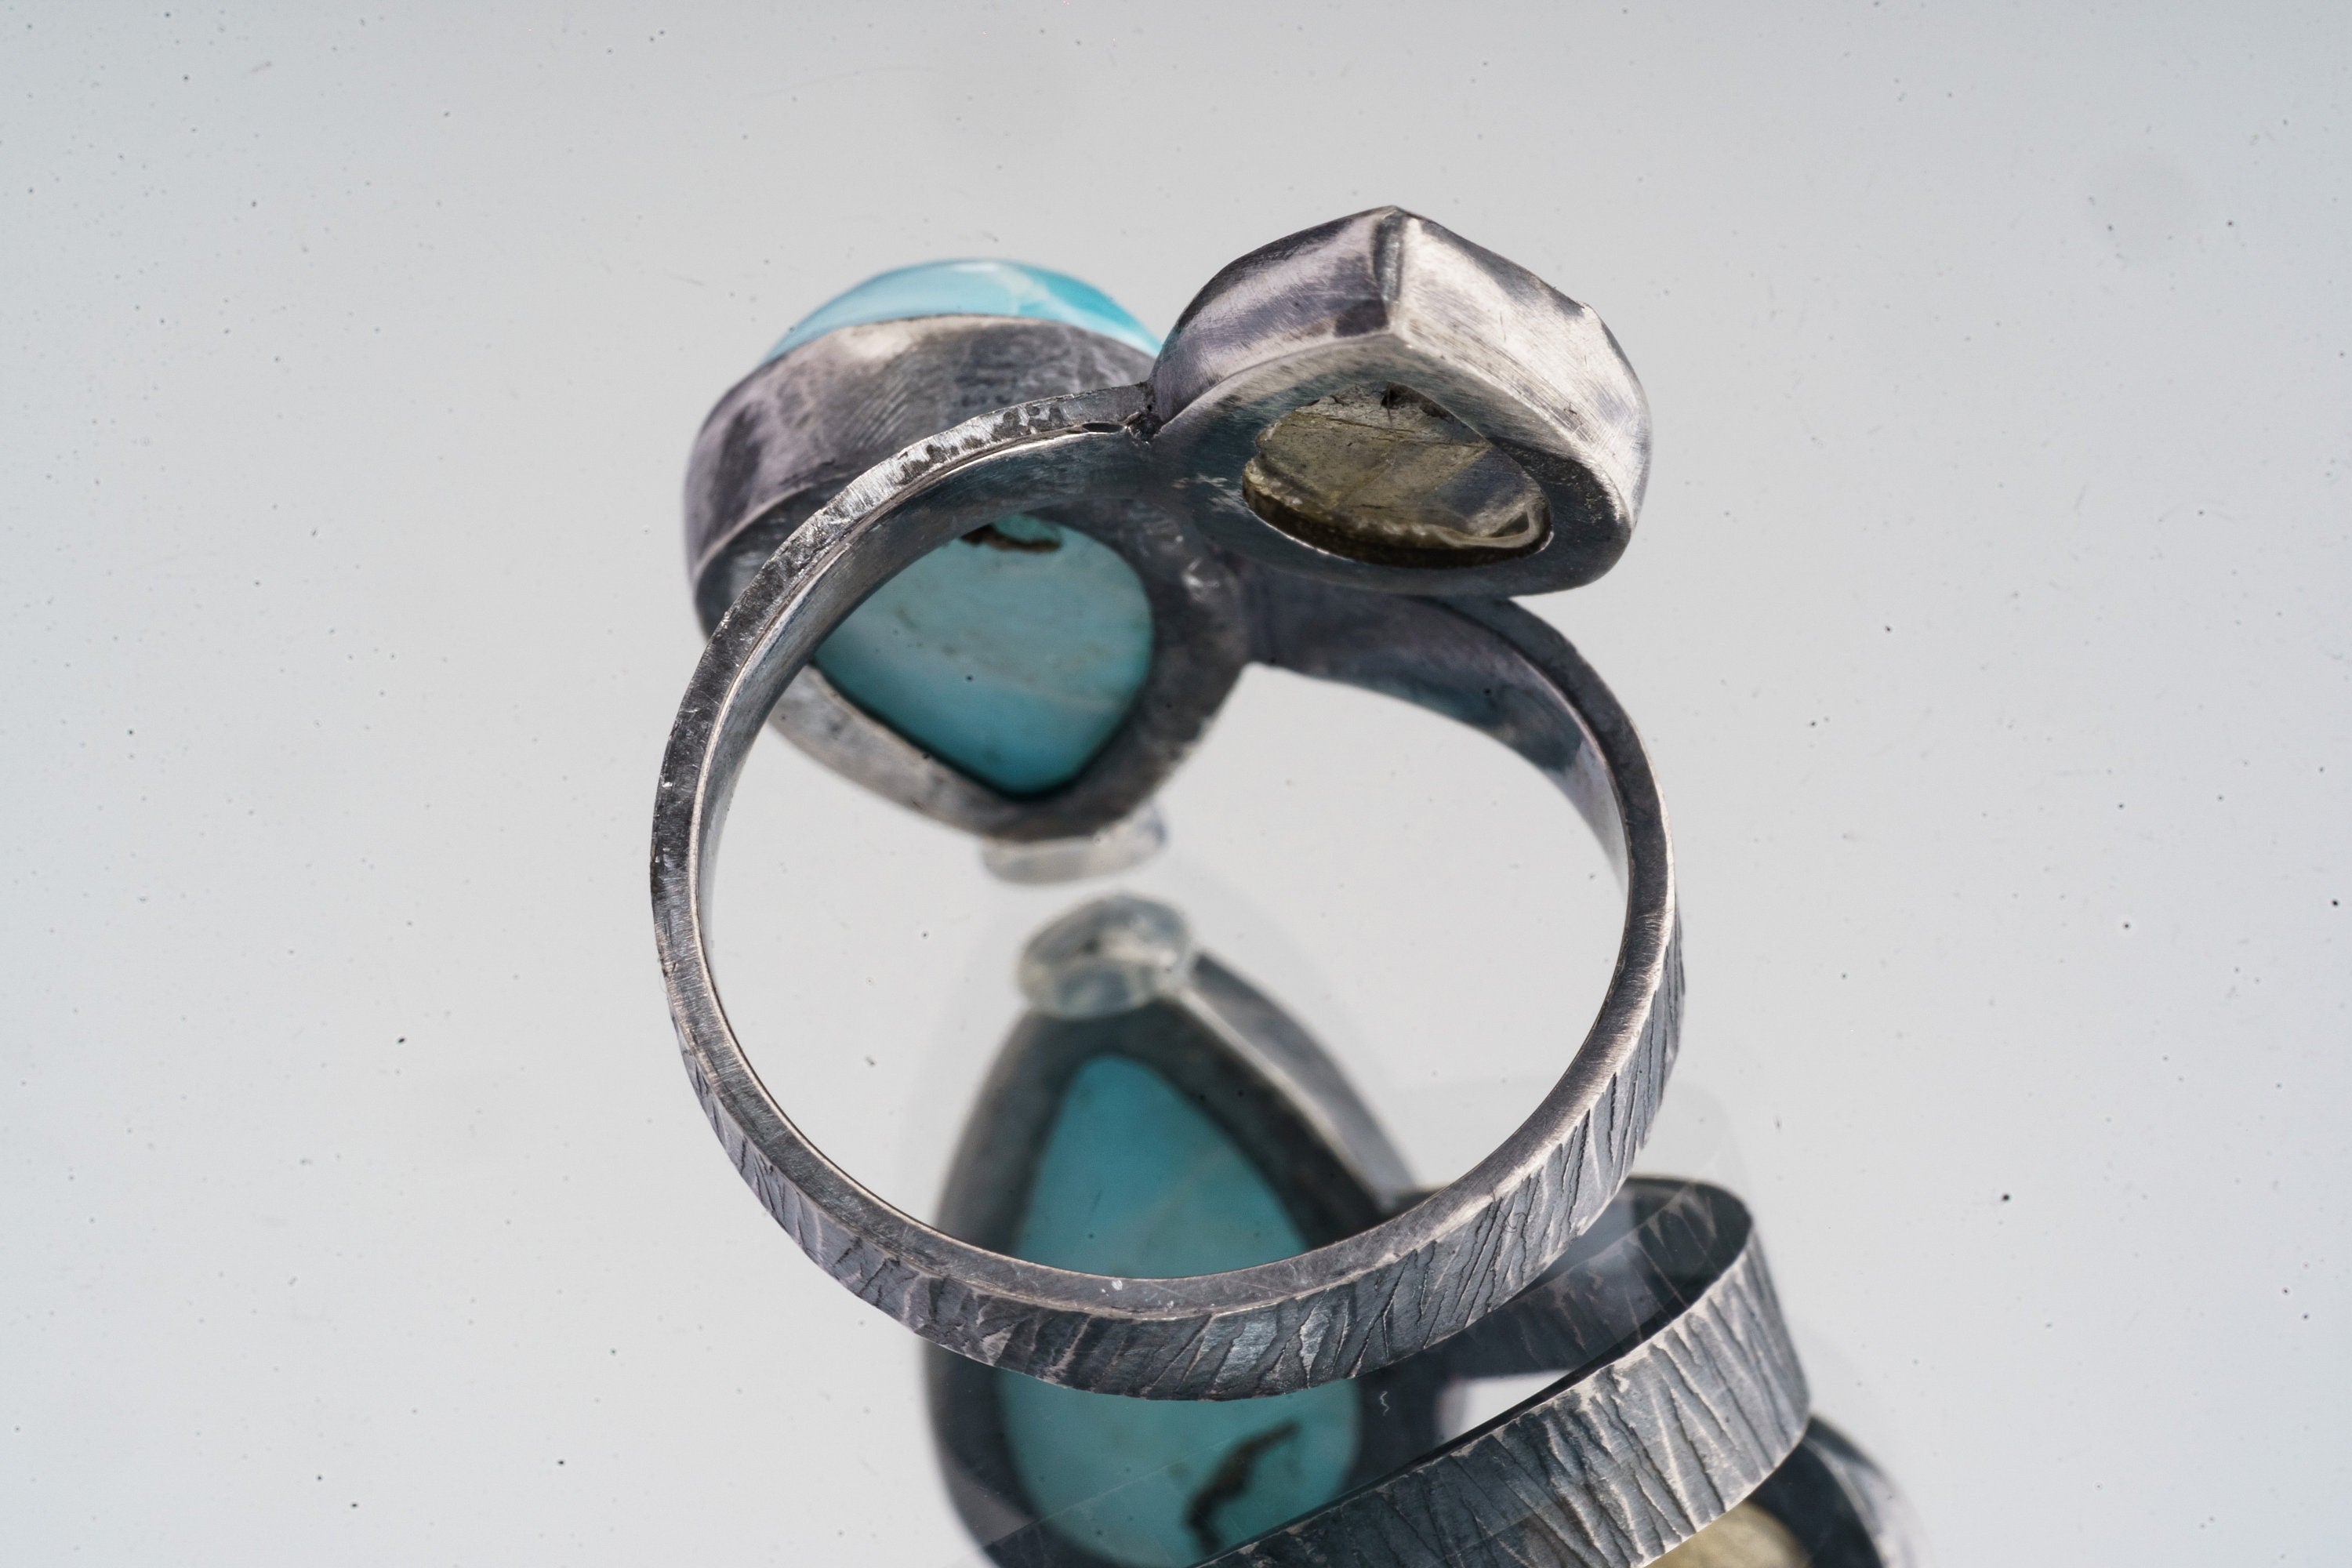 Harmonic Duo - Teardrop Labradorite and Larimar - Unisex - Size 4-10 US - Large Adjustable Sterling Silver Ring